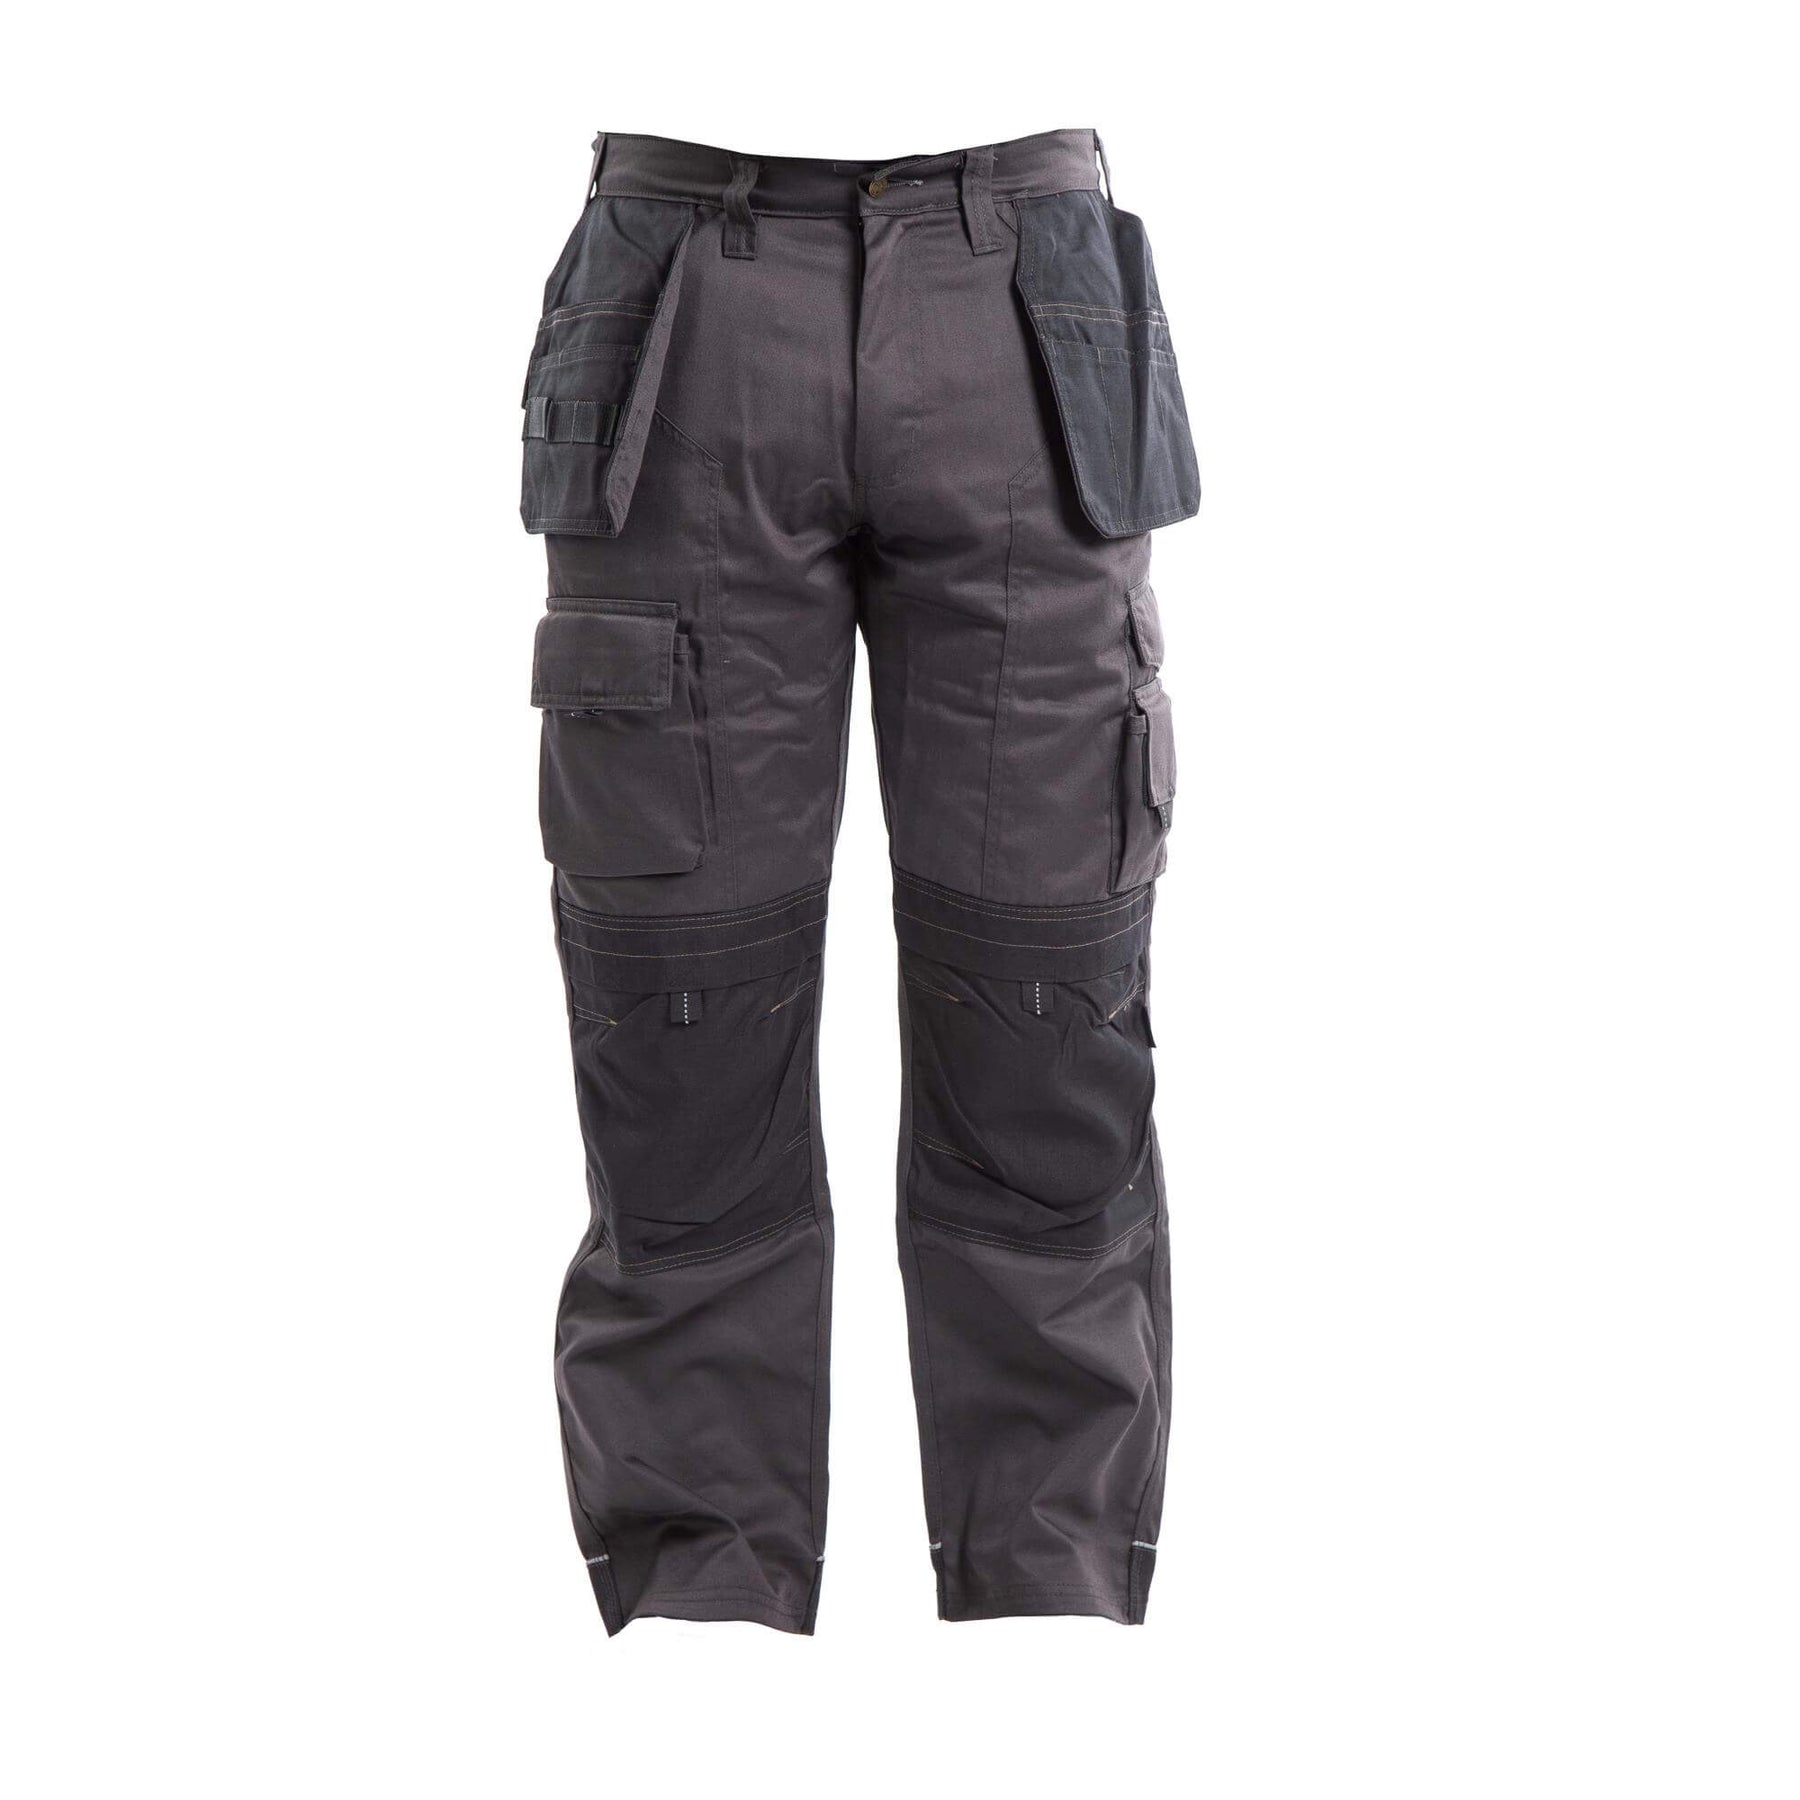 Apache APKHT Black Holster Pocket Knee Pad Trousers – workweargurus.com